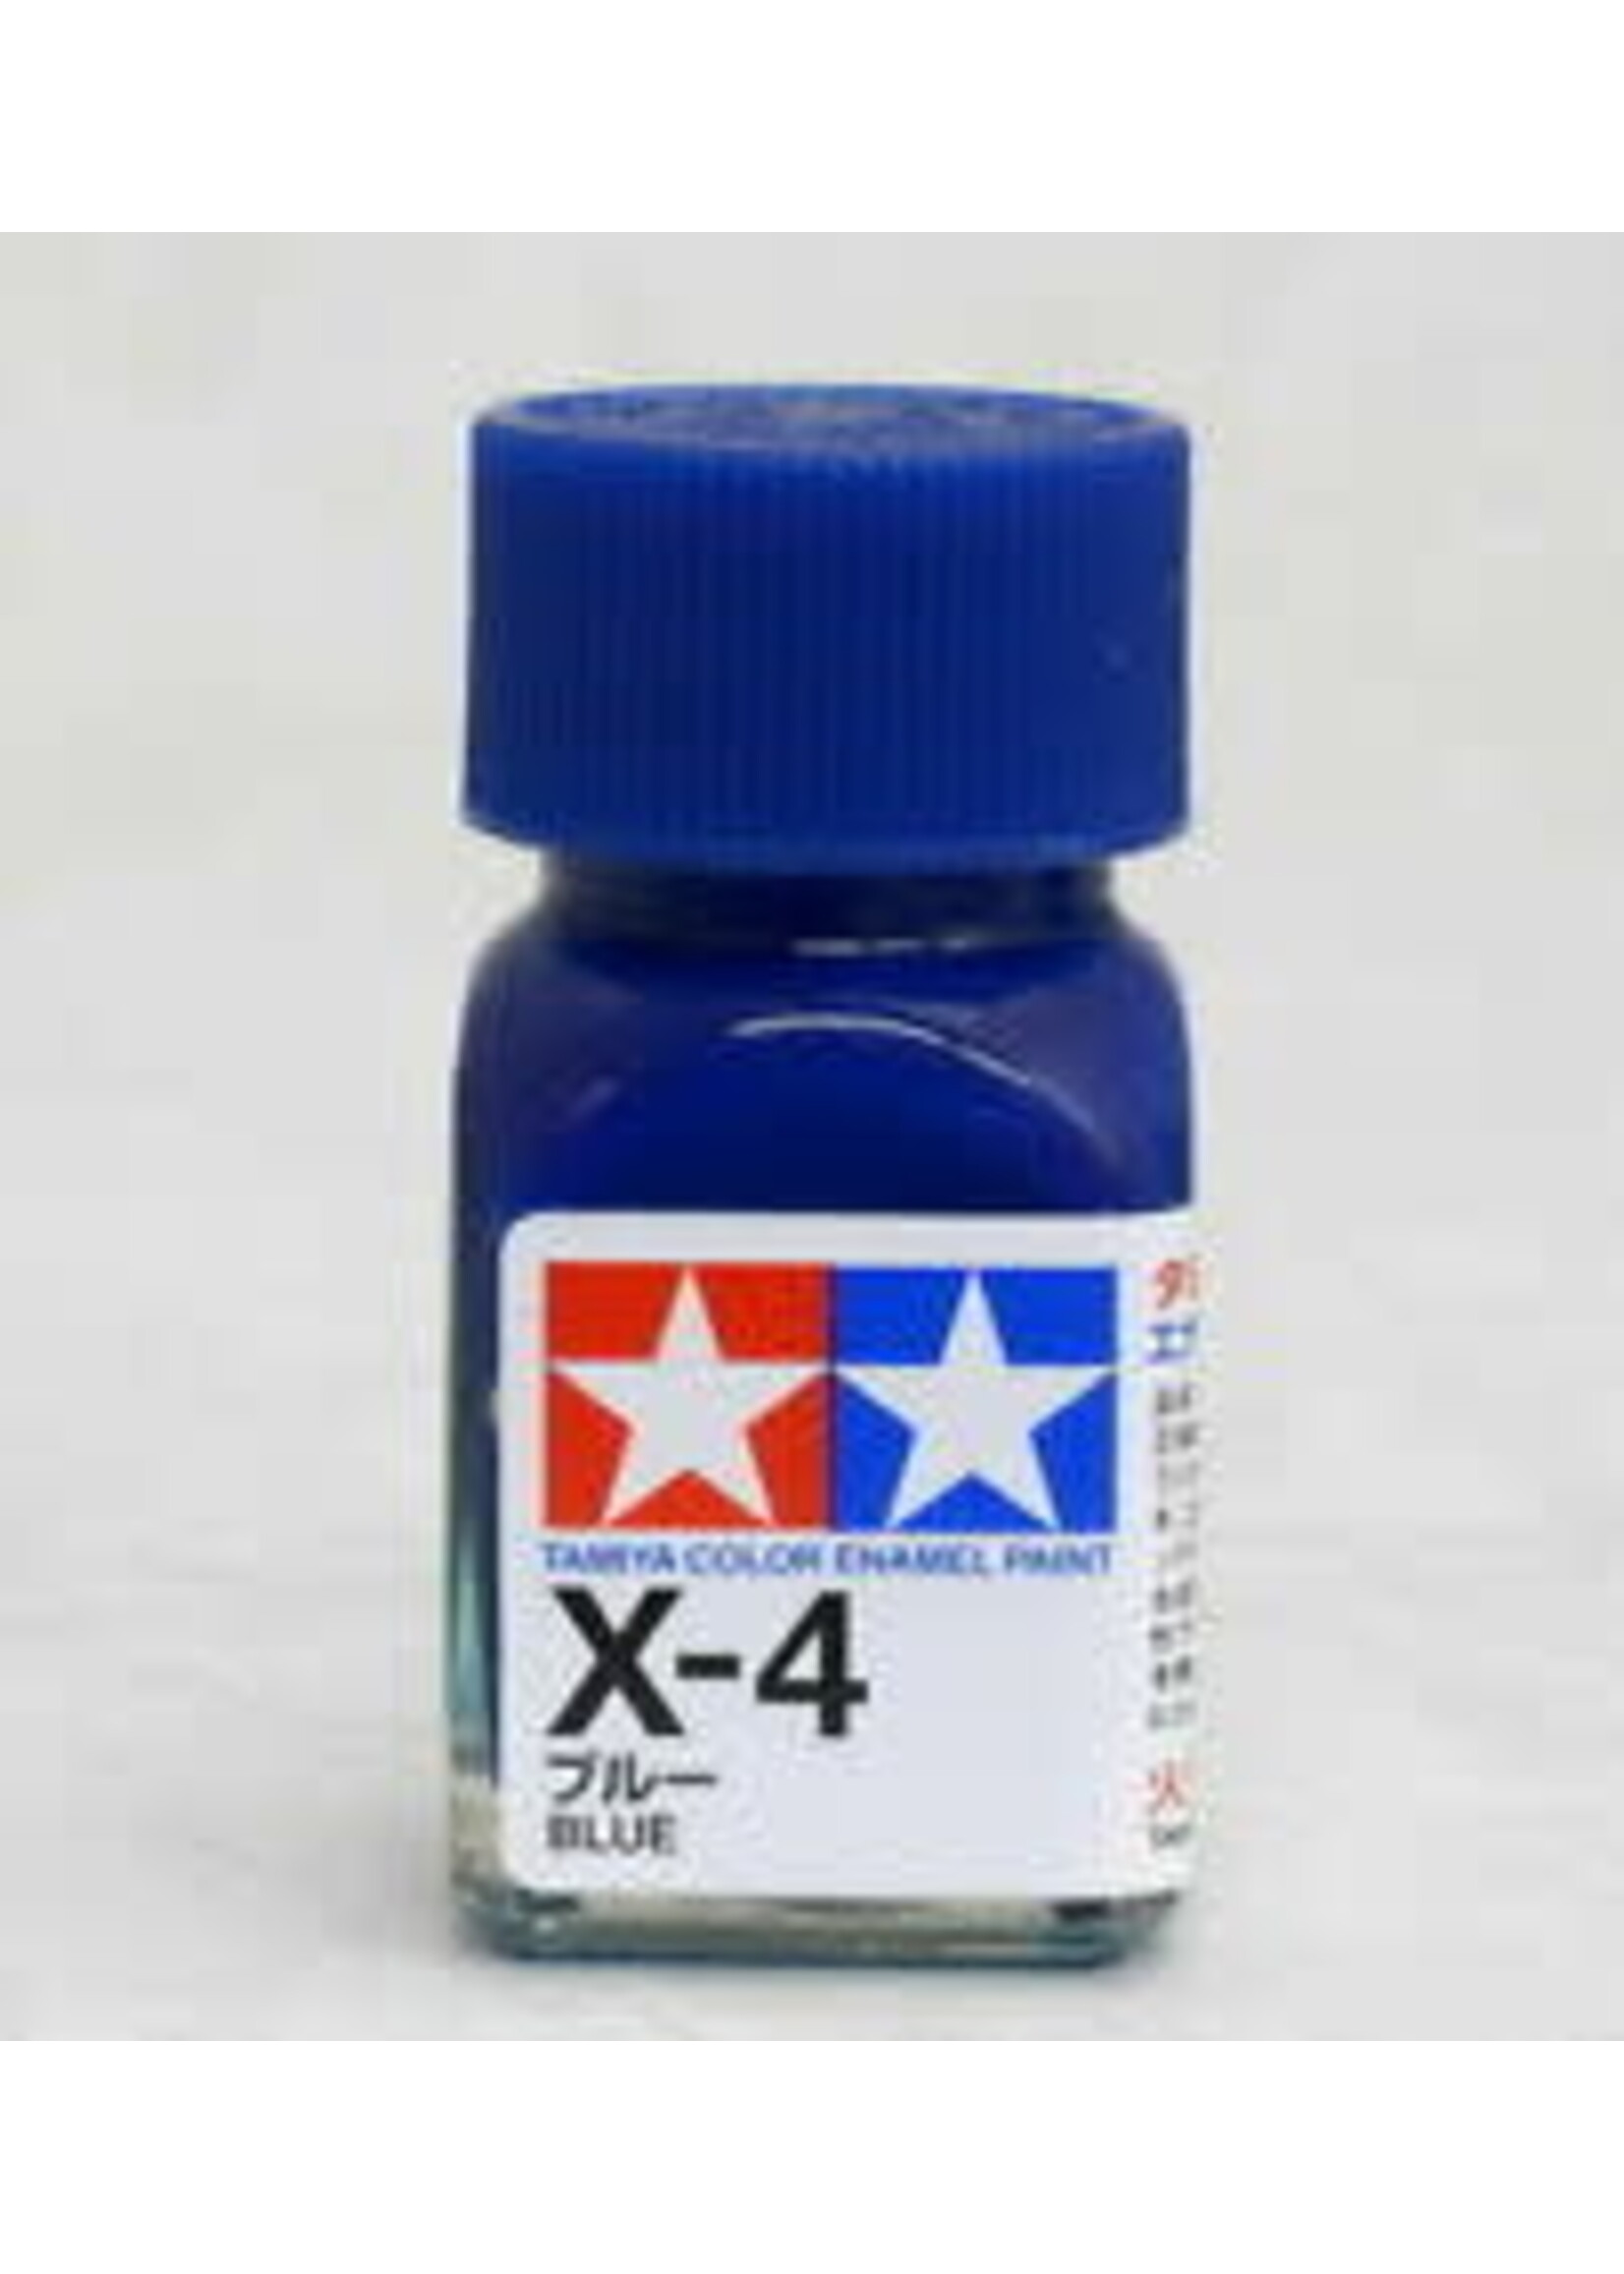 Tamiya Tamiya color enamel paint - X-4  - Blue